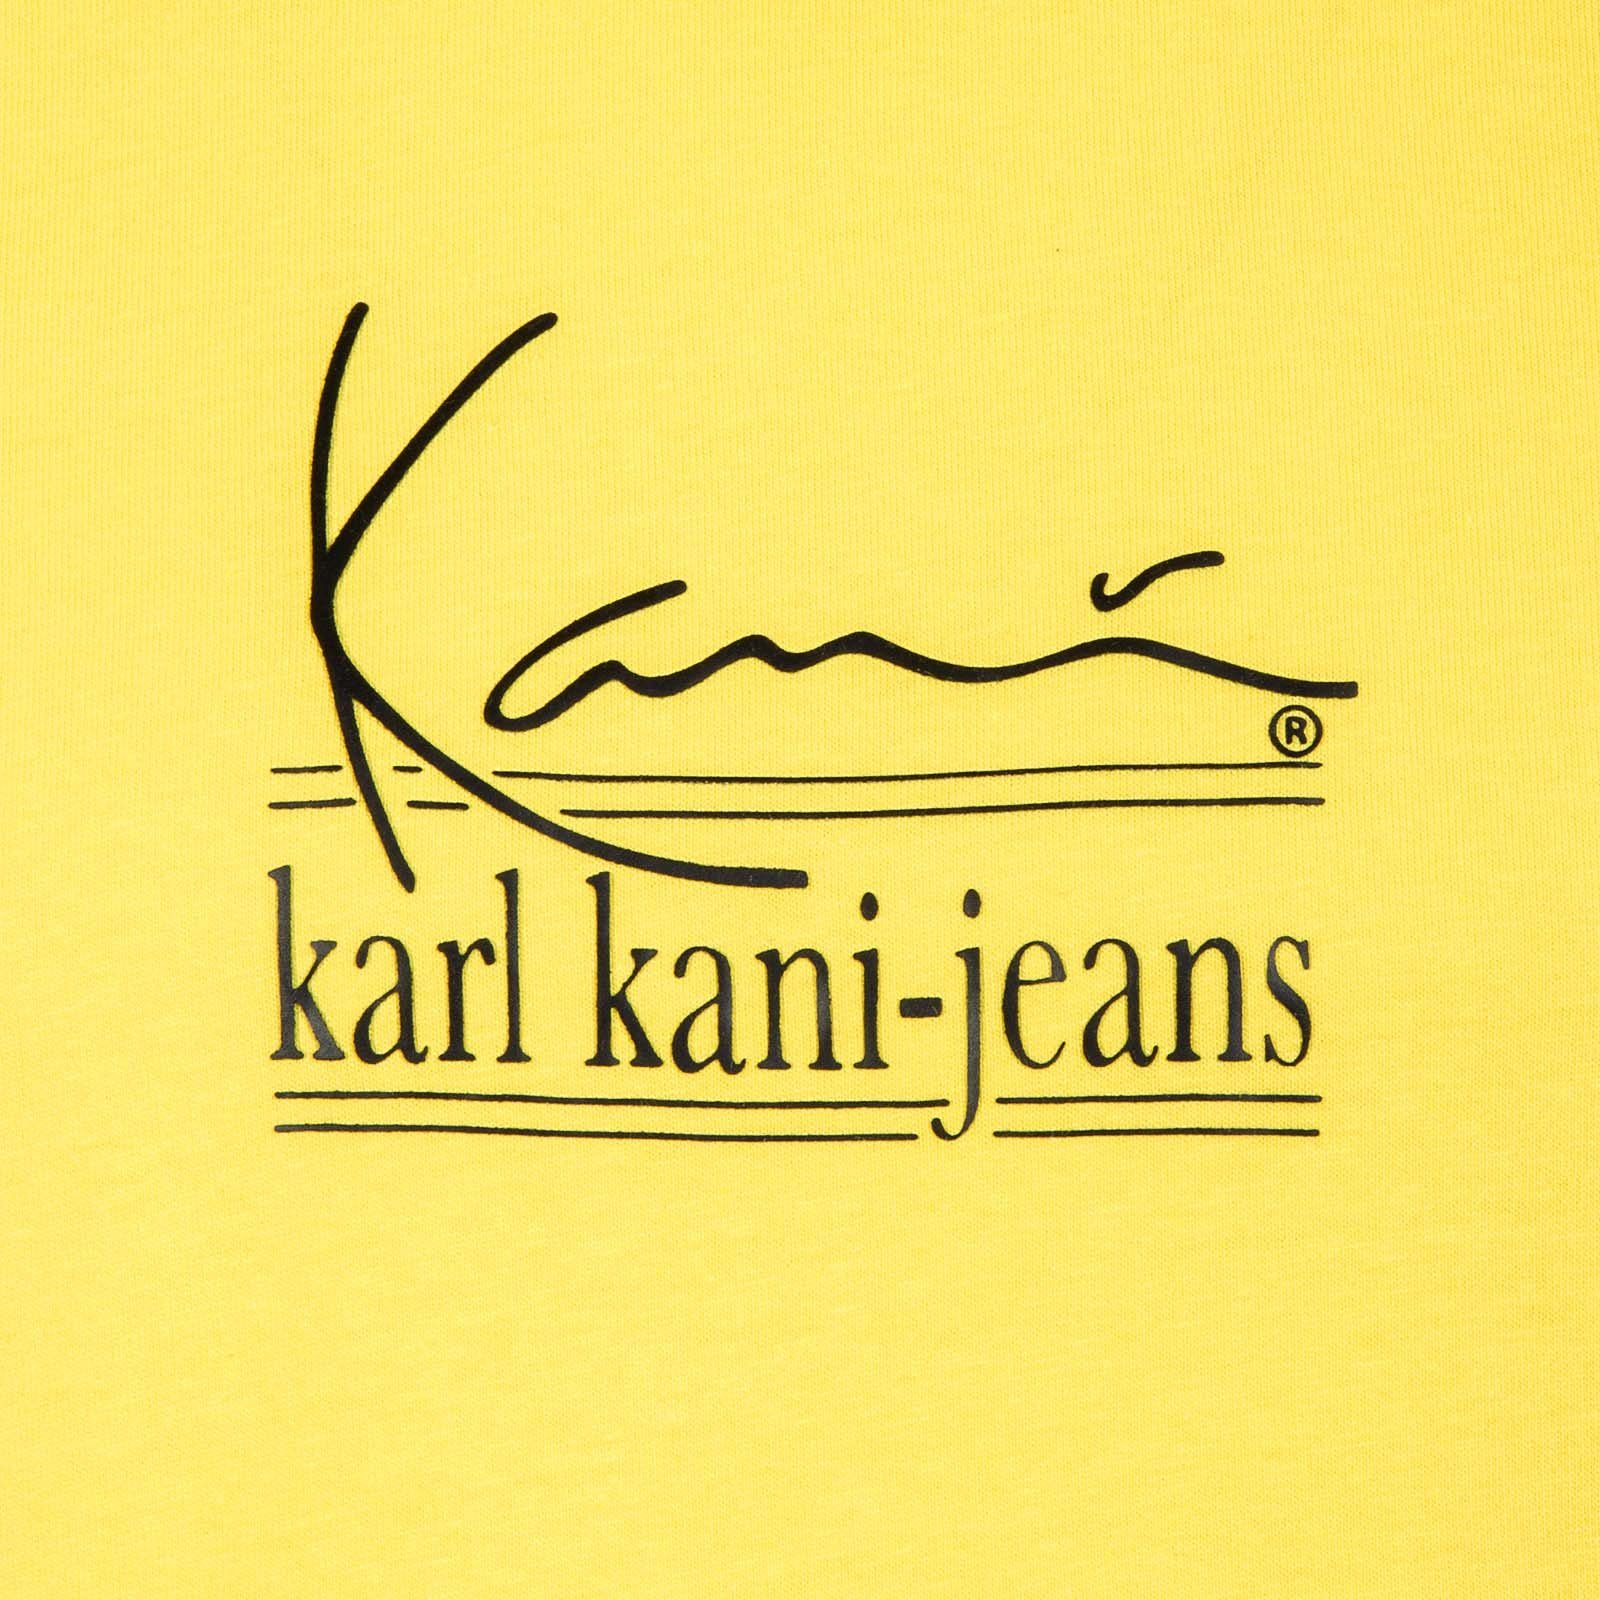 T-Shirt Karl Kani KKJ Signature